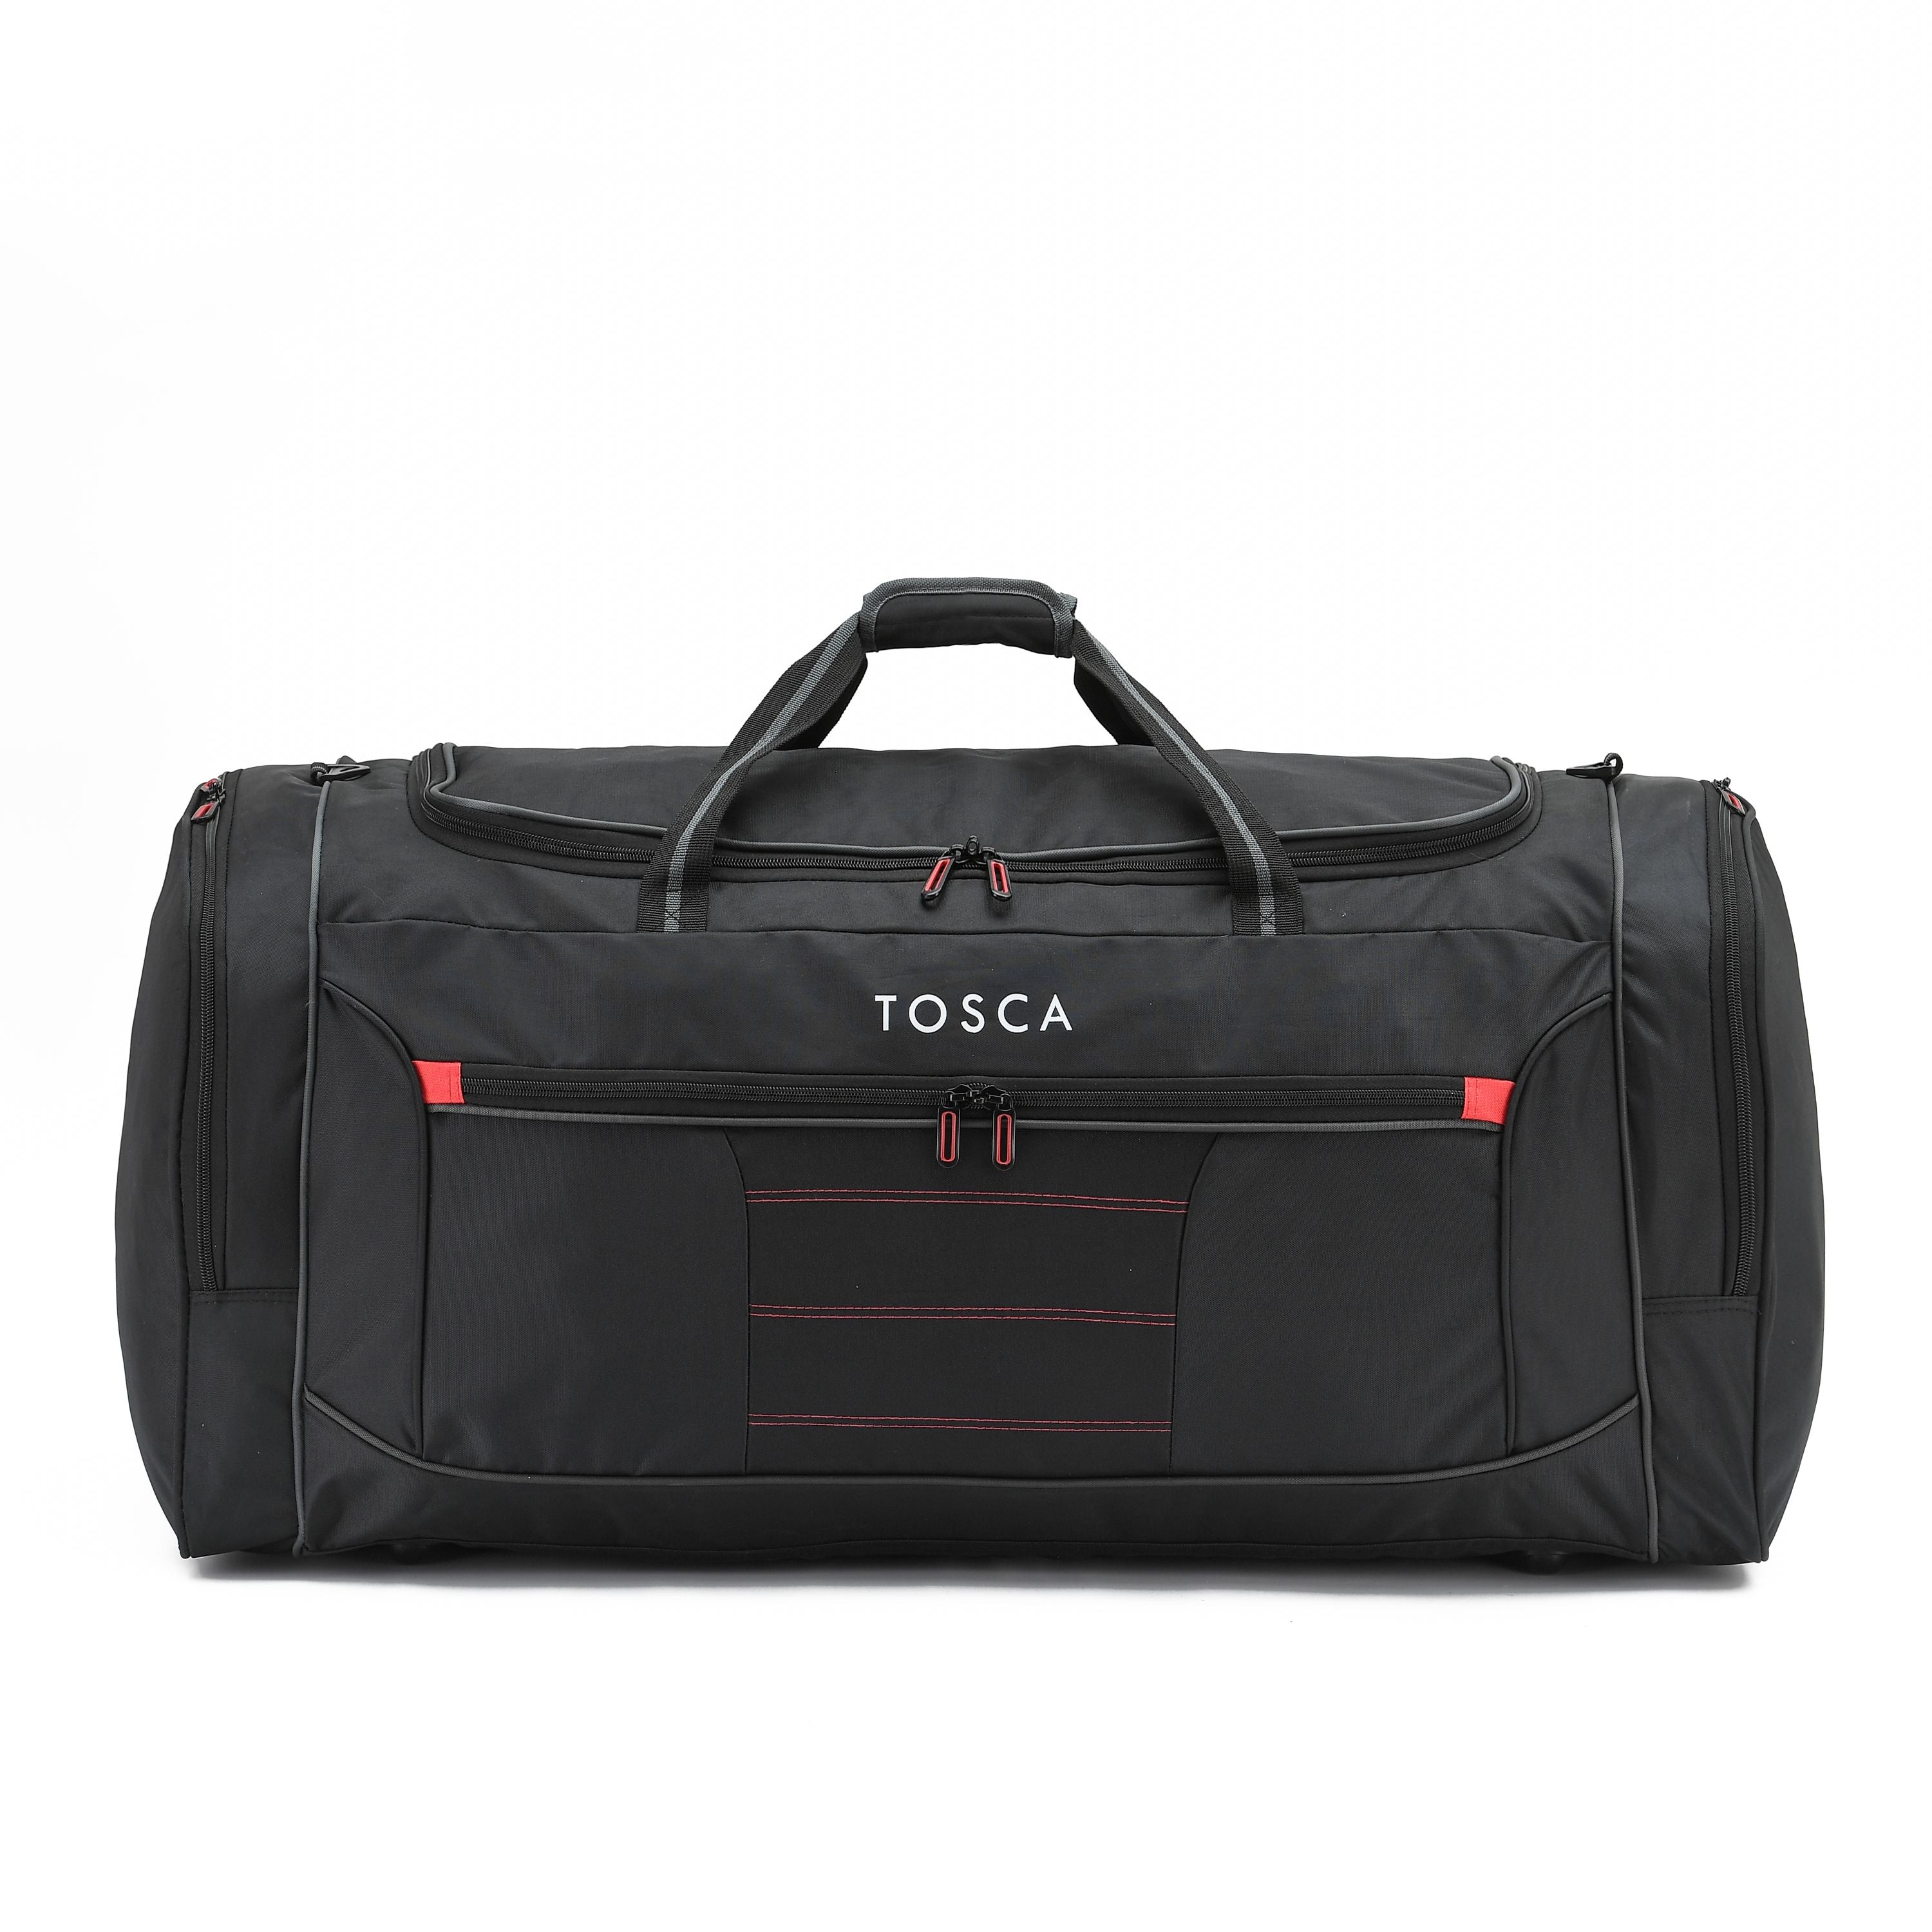 Tosca - TCA794J 90cm Jumbo Duffle Bag - Black/Red-1